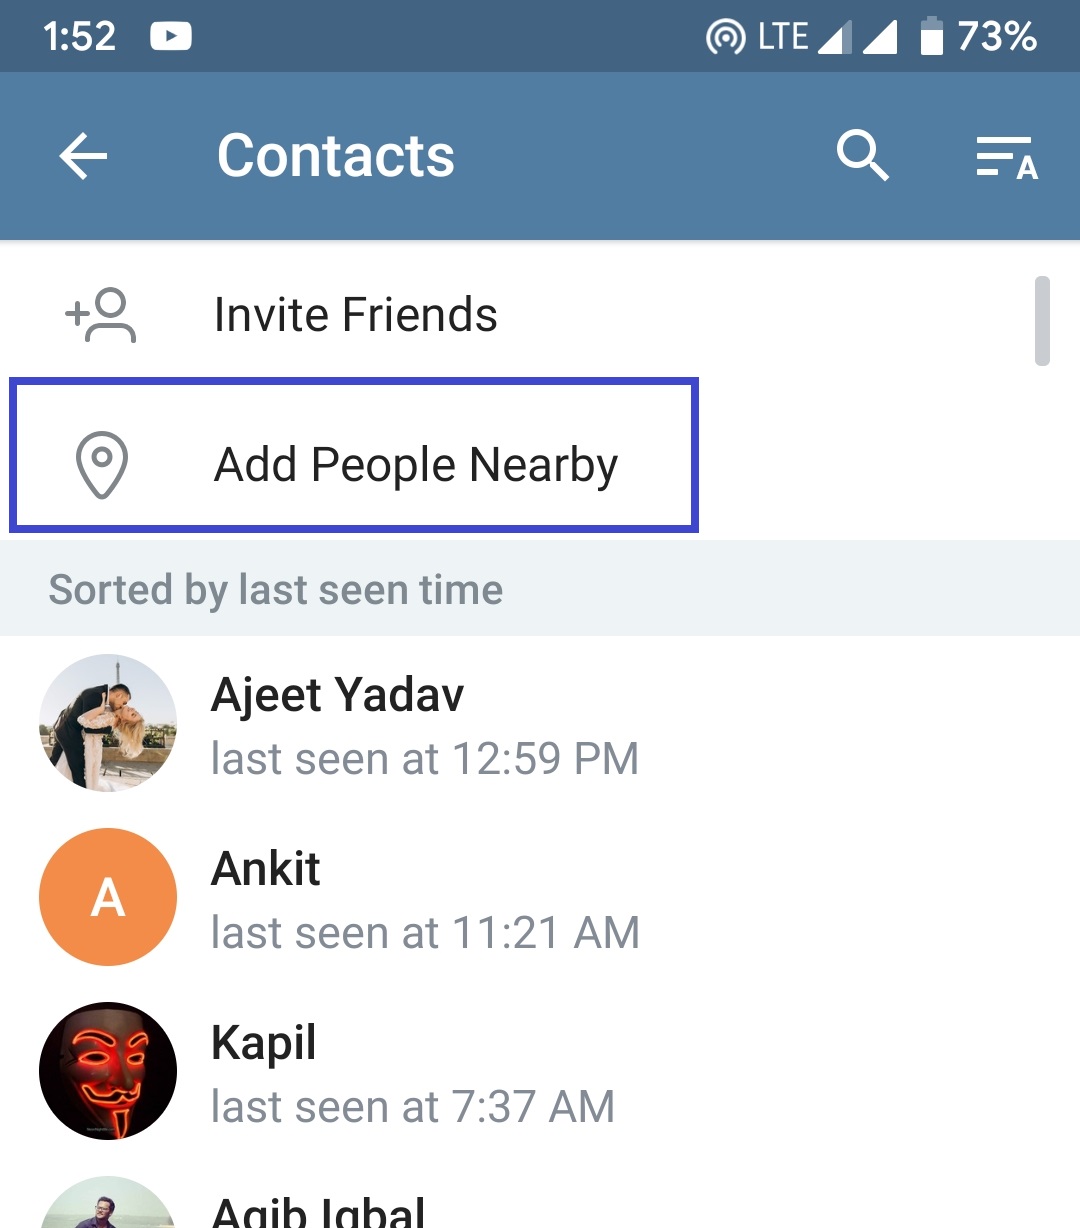 add nearby people